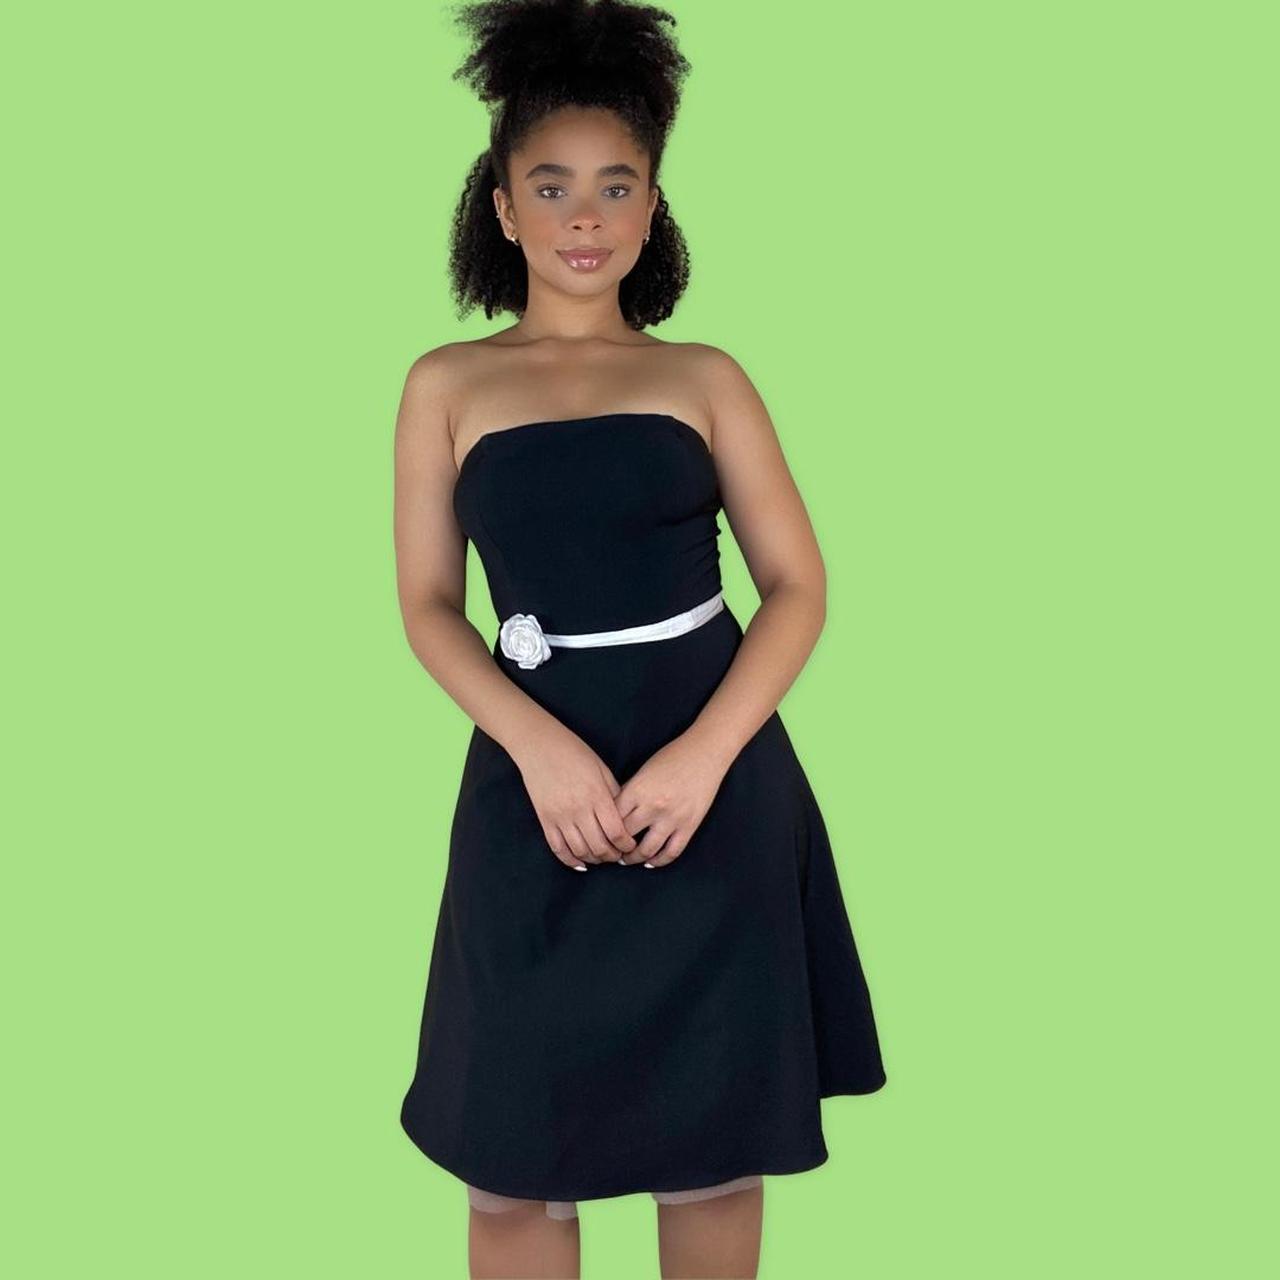 Product Image 1 - Strapless Grunge Core Dress. Size: